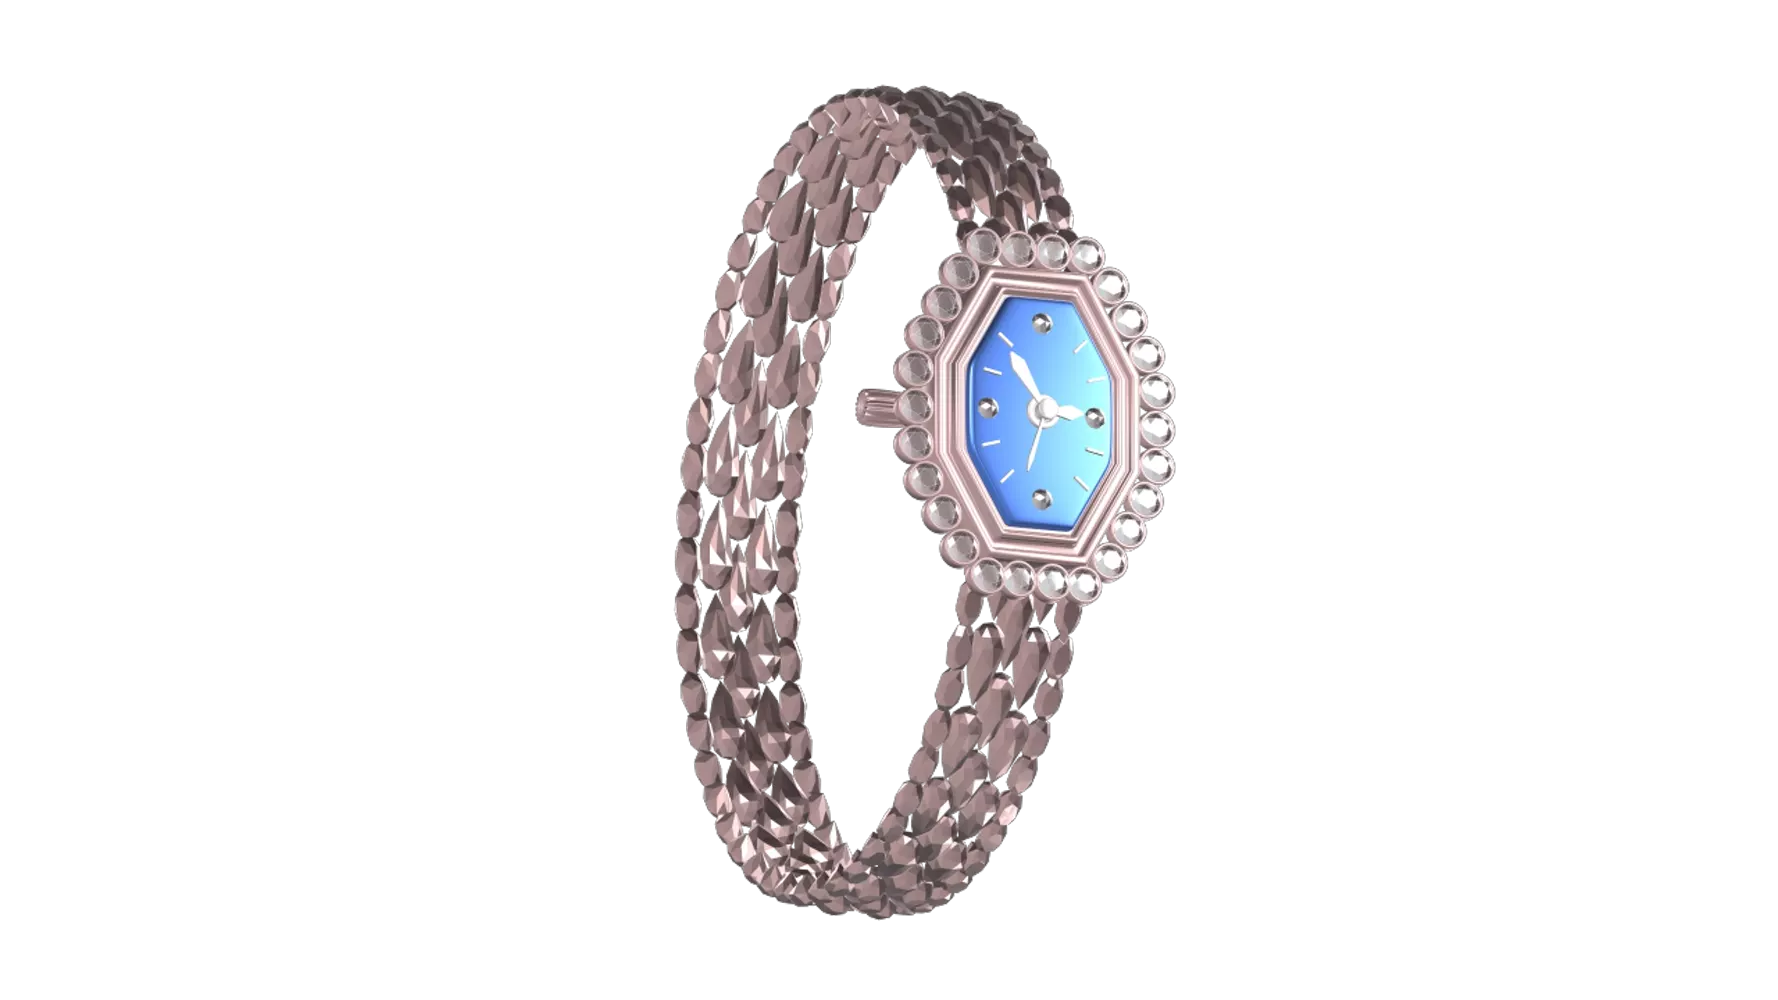 Luxury Watch 3D Graphic